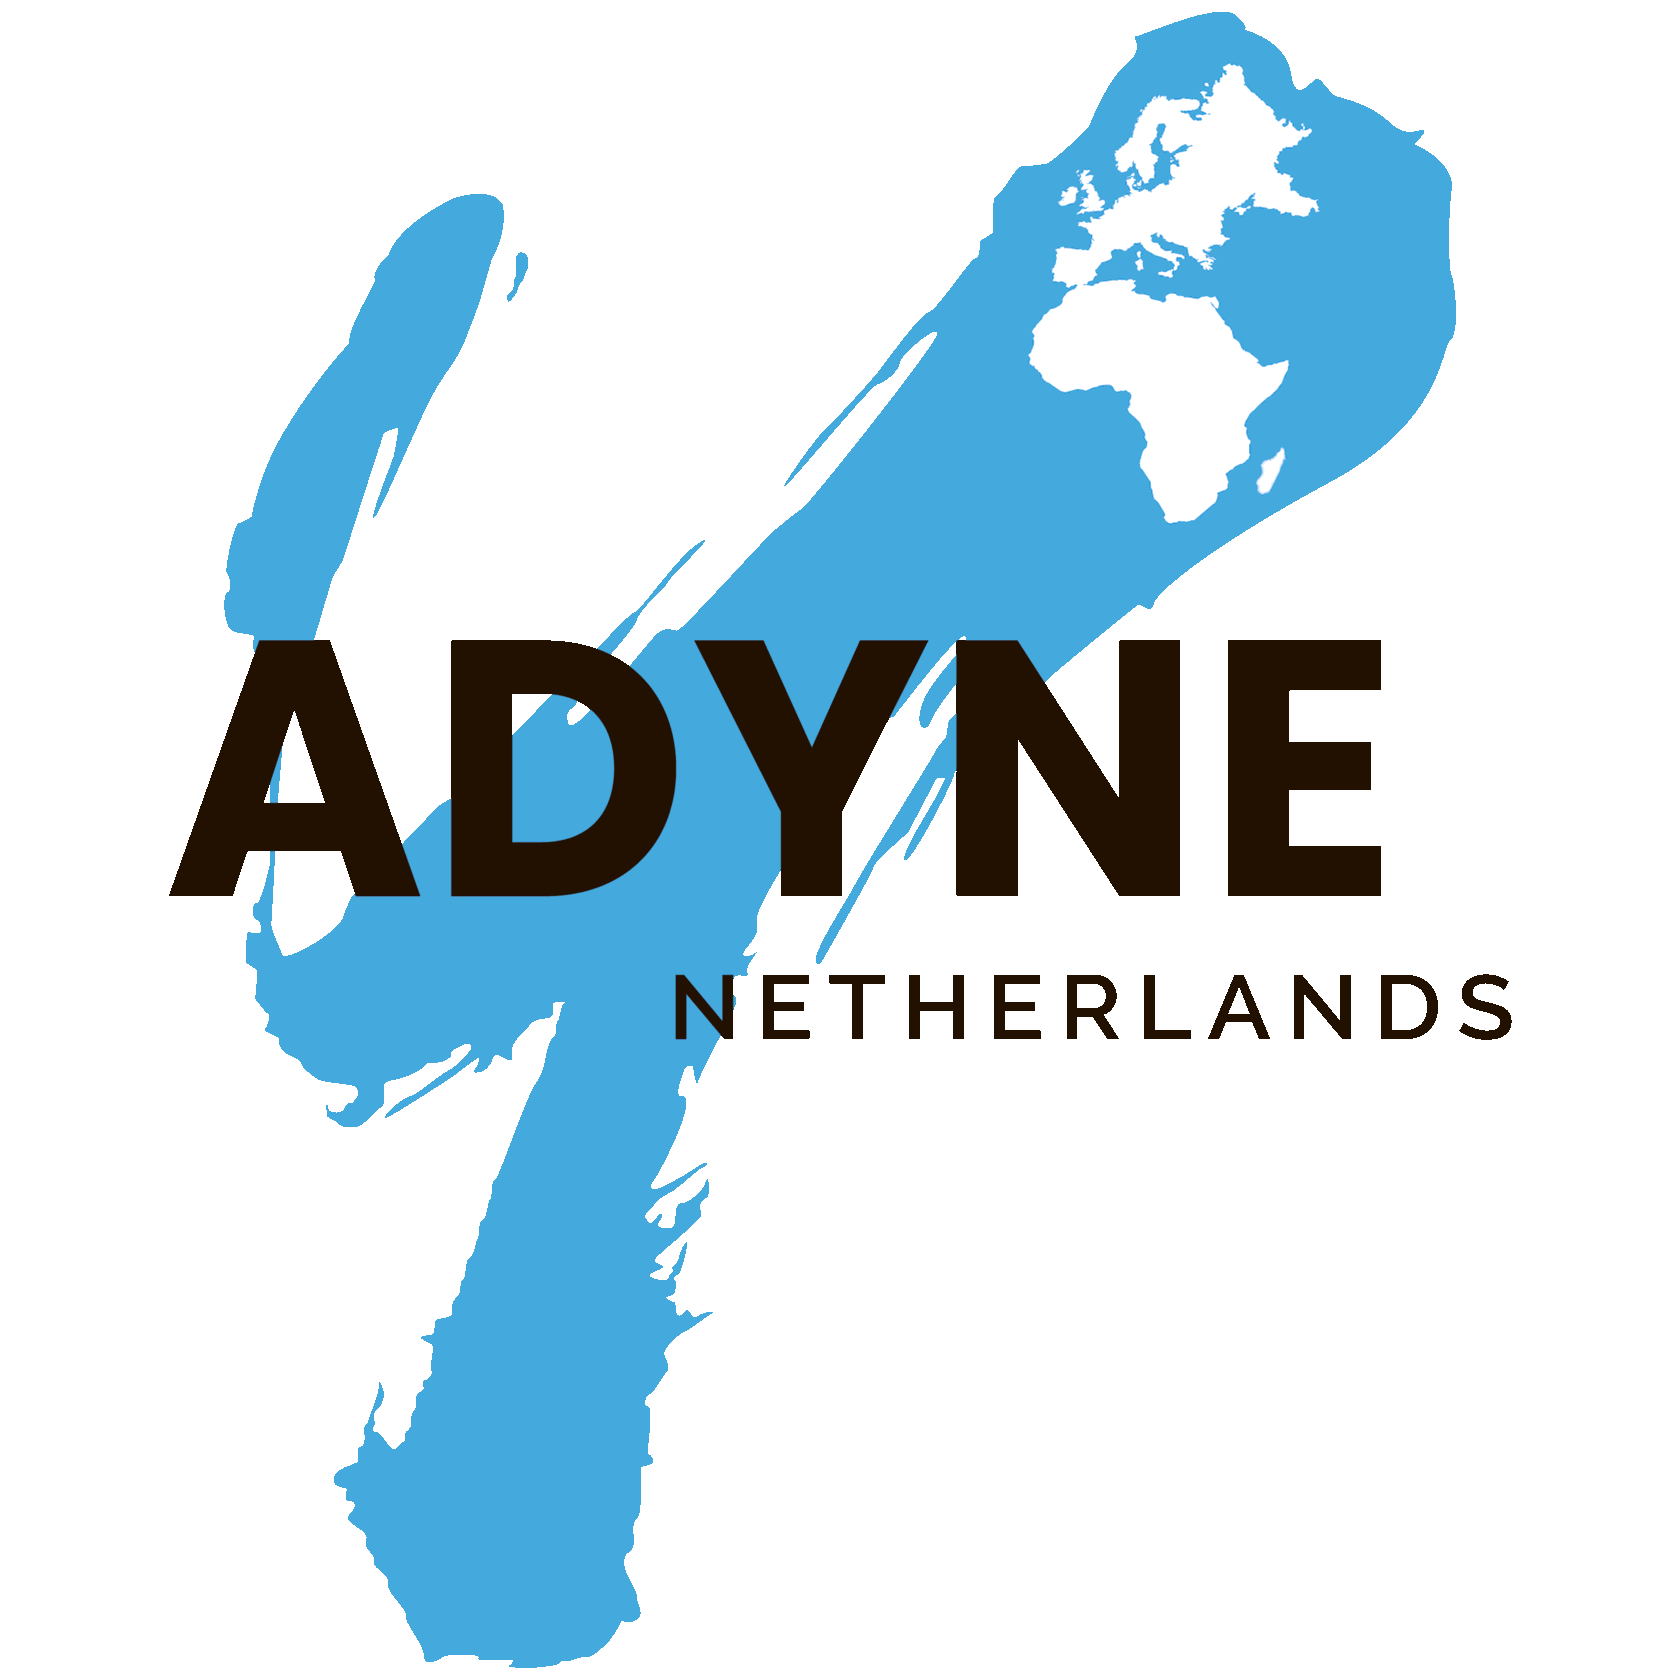 ADYNE Netherlands